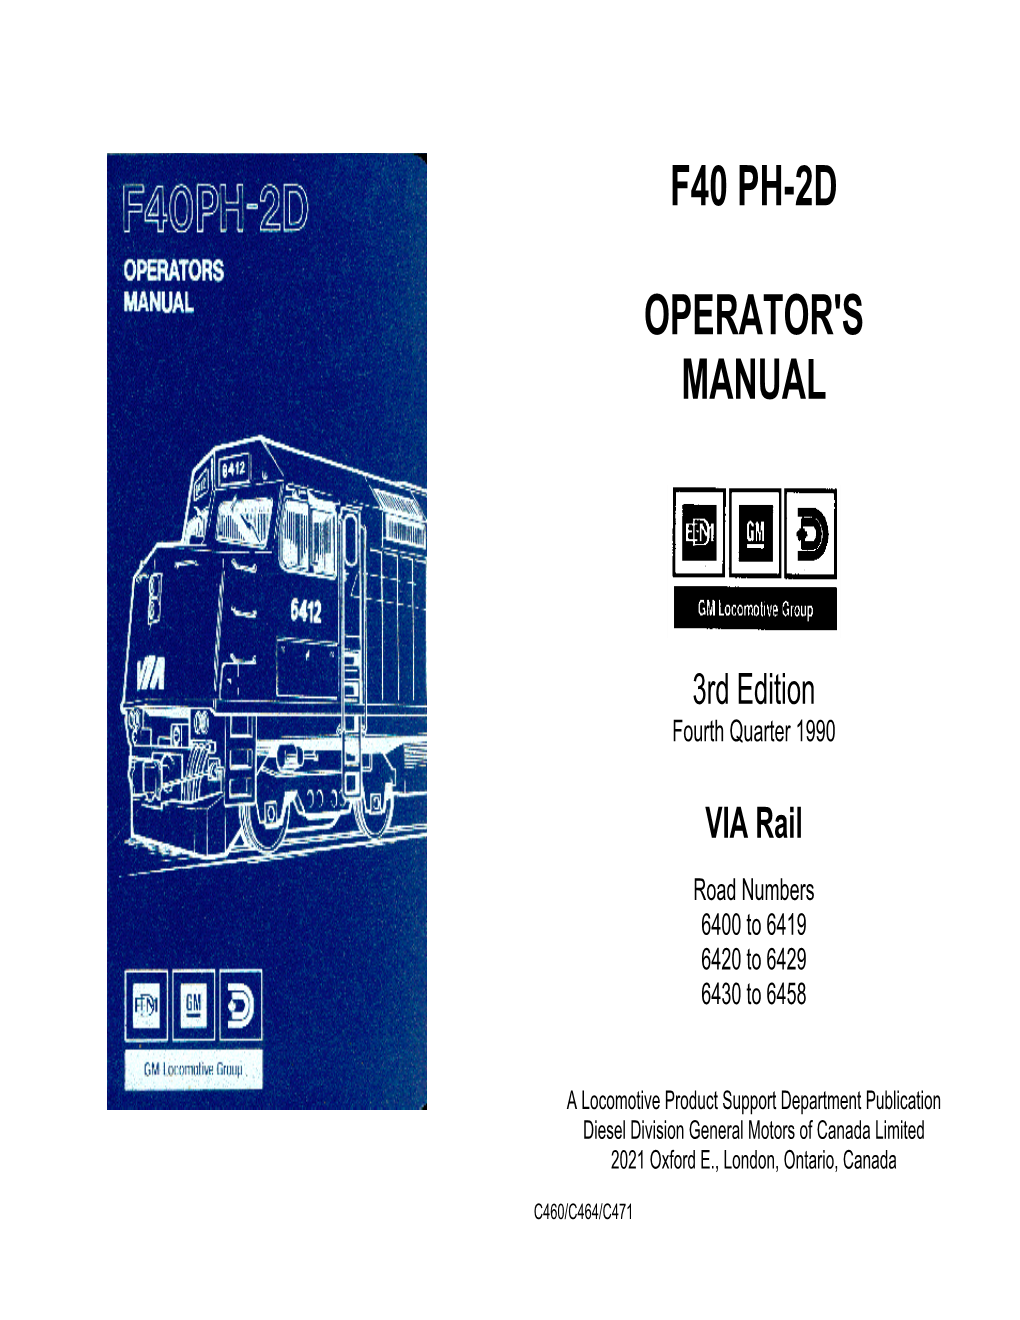 F40 Ph-2D Operator's Manual